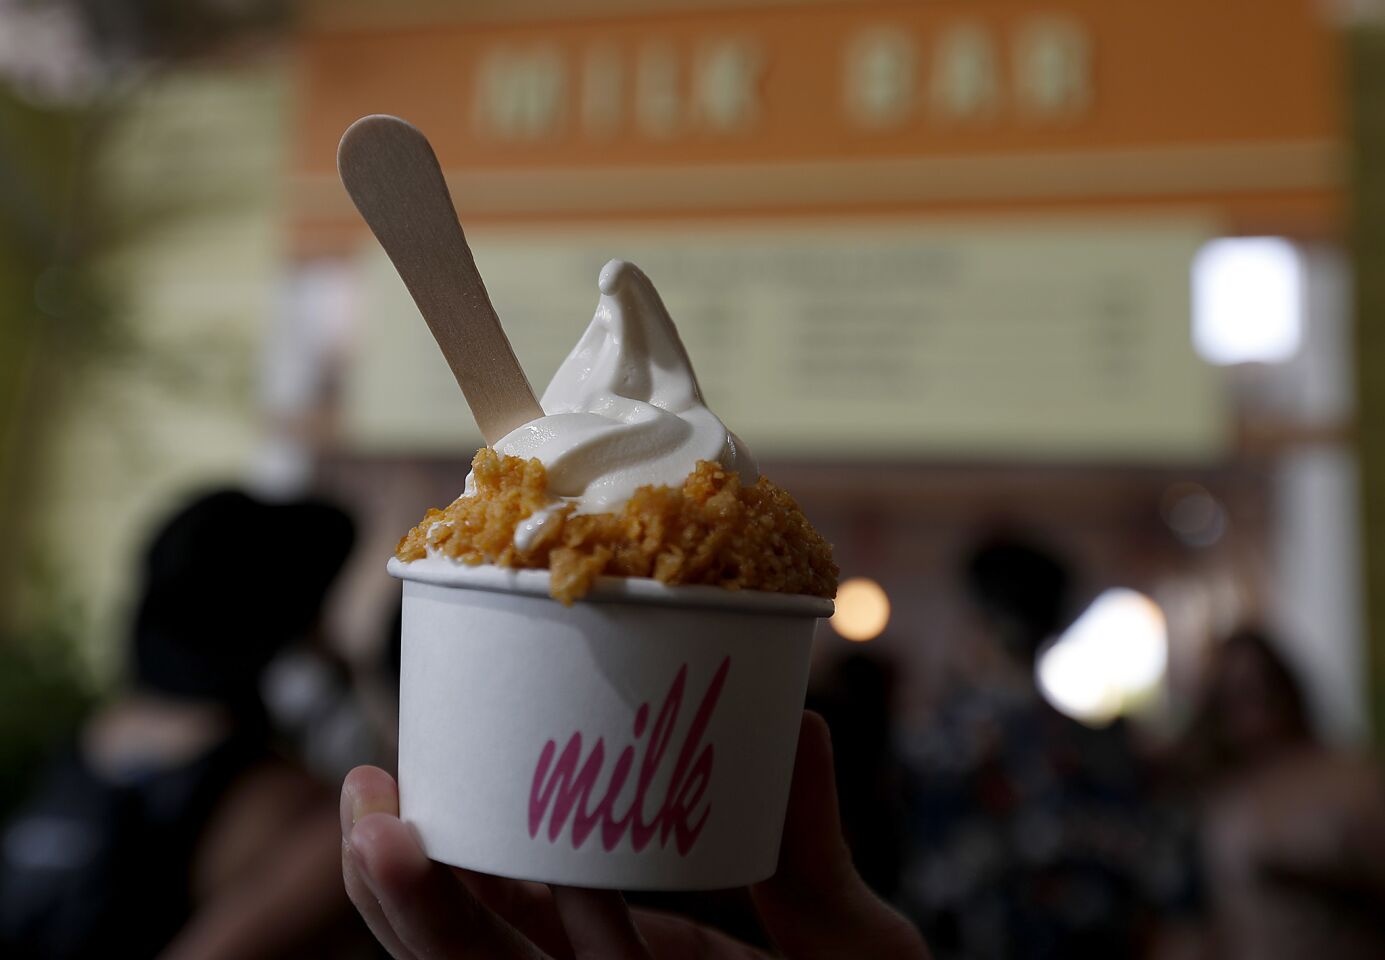 For dessert, Milk Bar offers cereal milk soft serve ice cream.